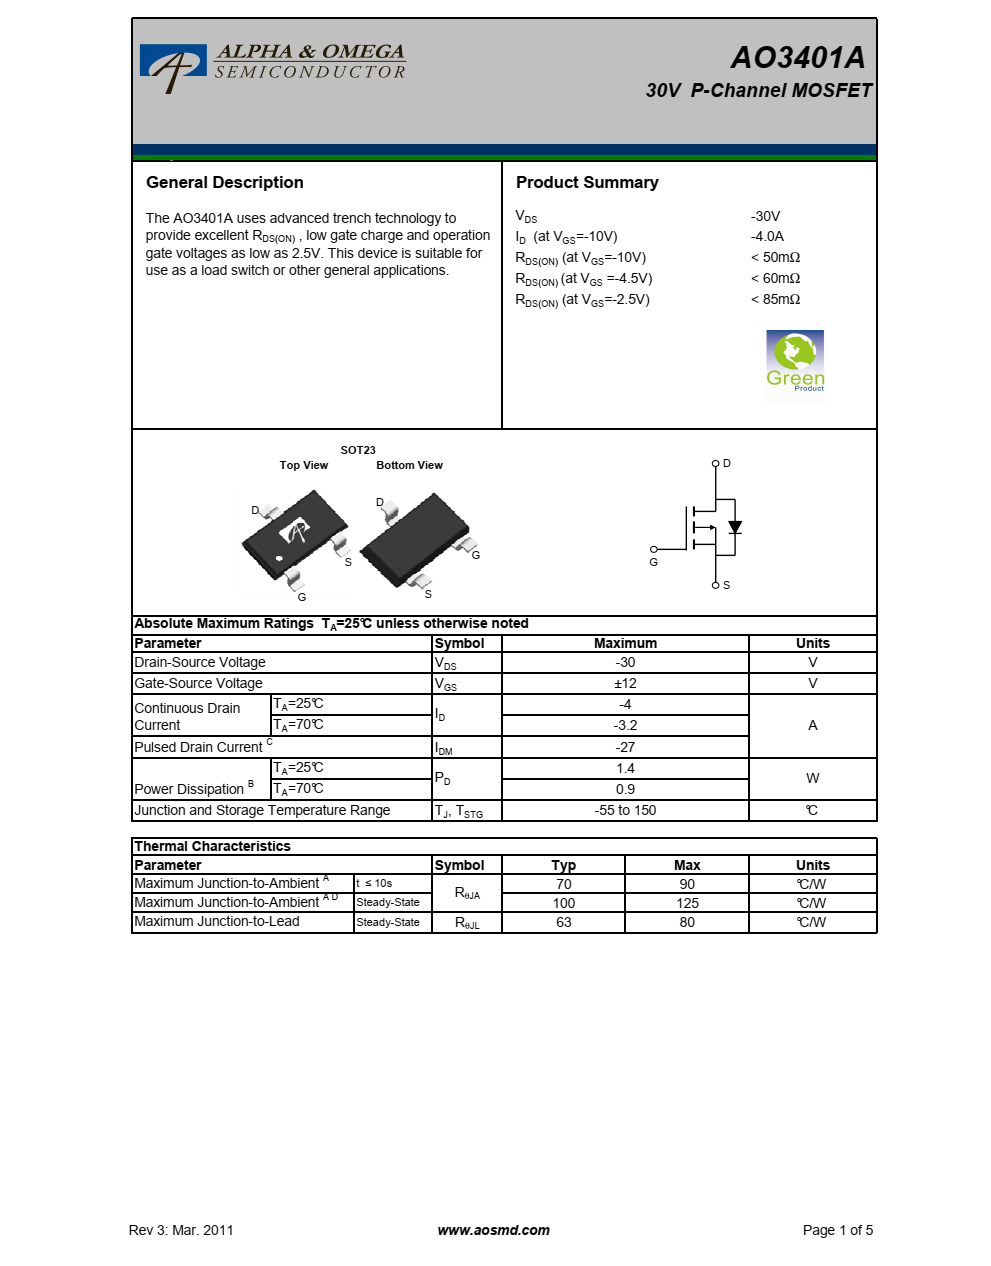 AO3401A采用先进的沟槽技术提供卓越的TRDS（ON）、低栅极电荷和低操作